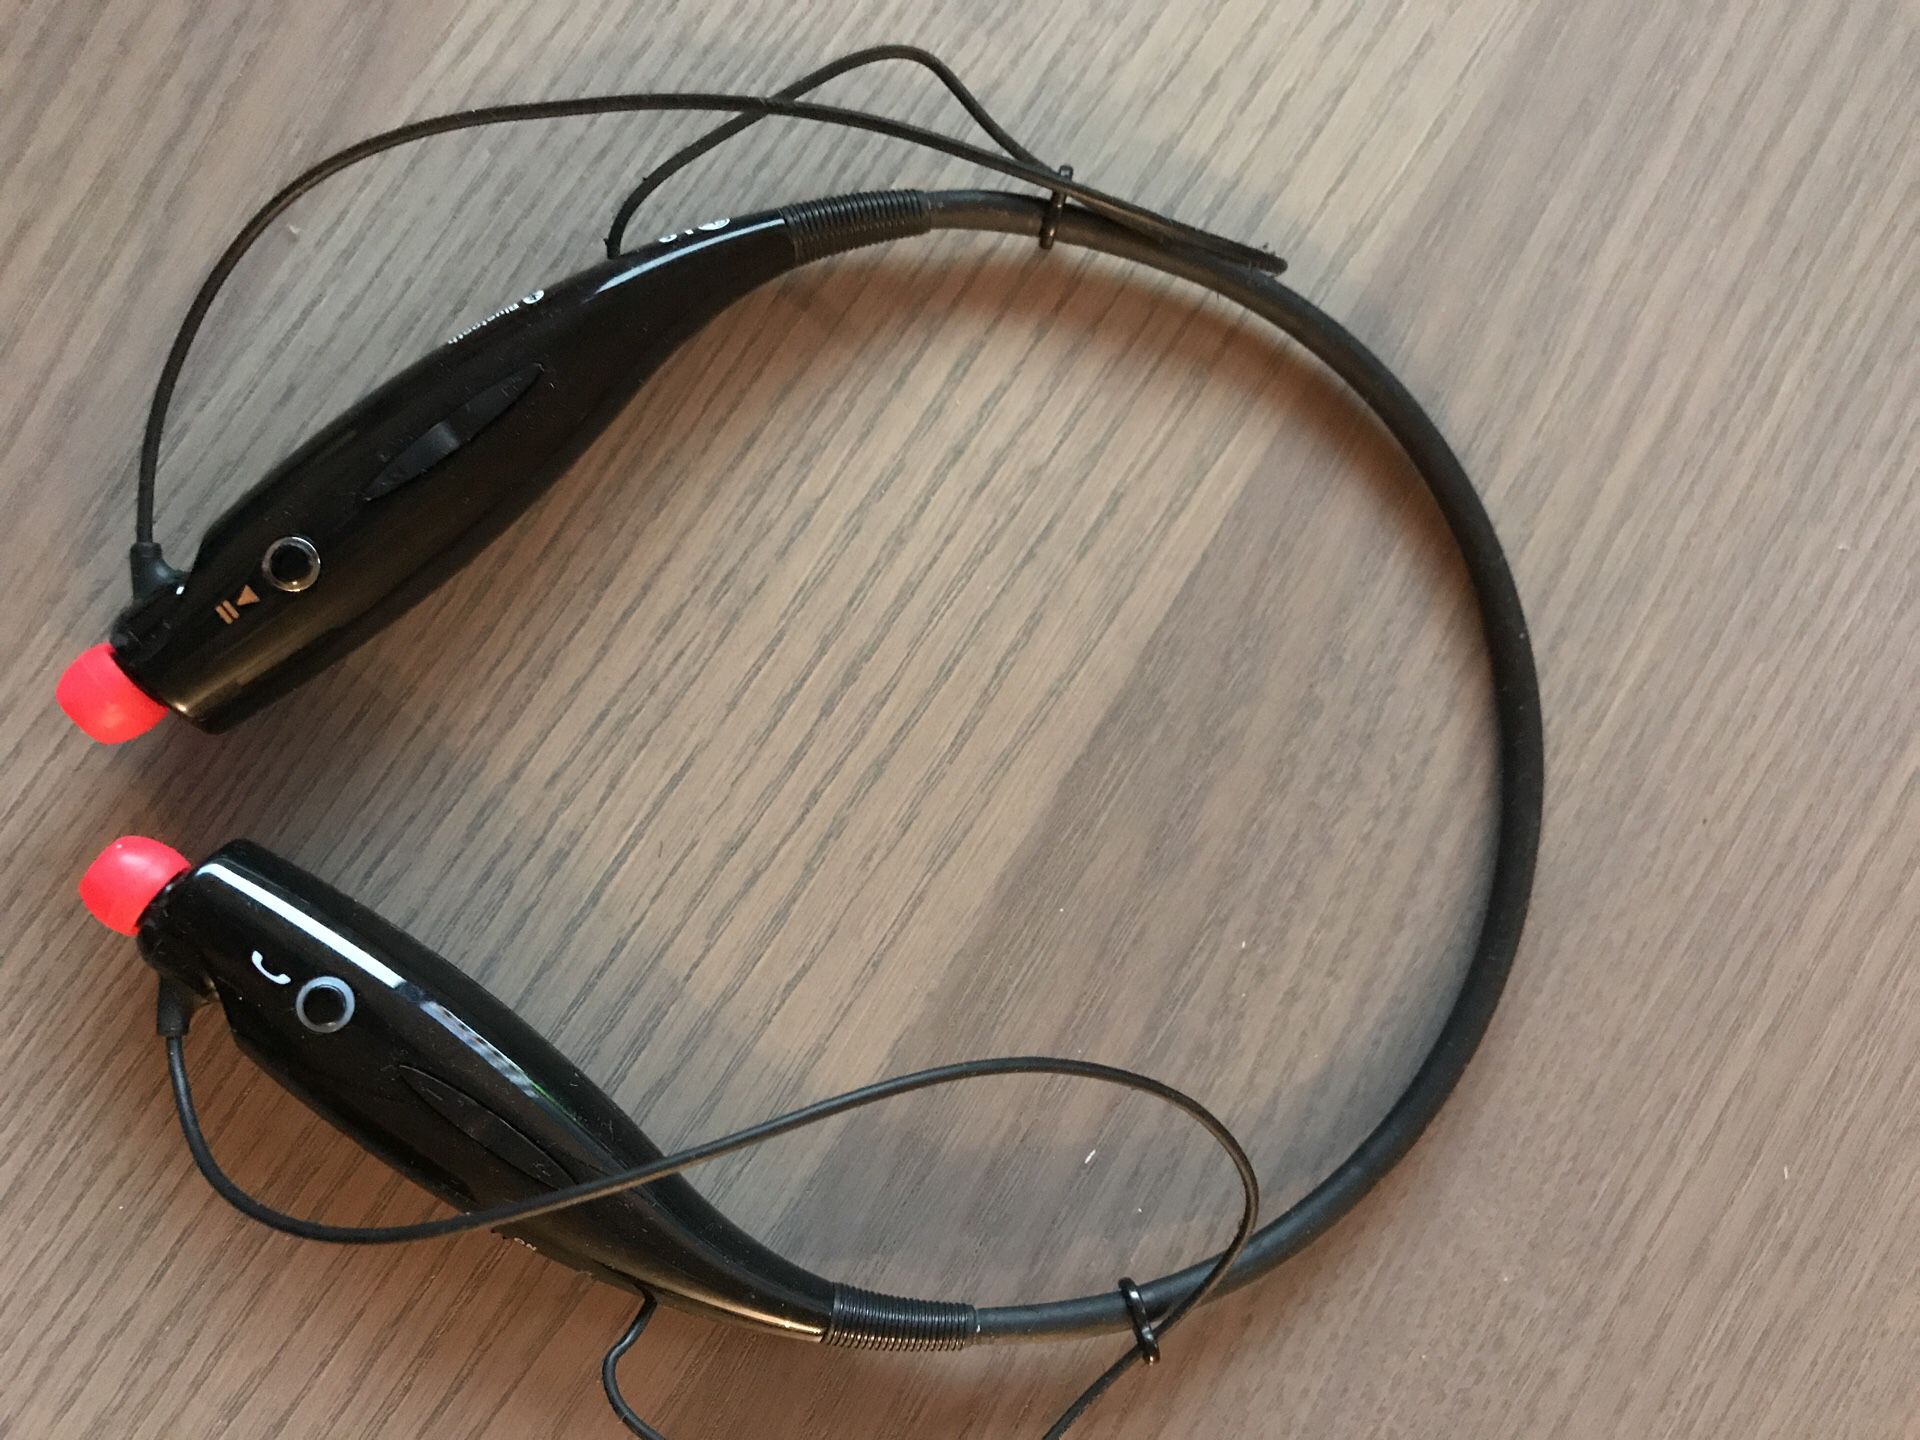 LG HBS-700 wireless headphones